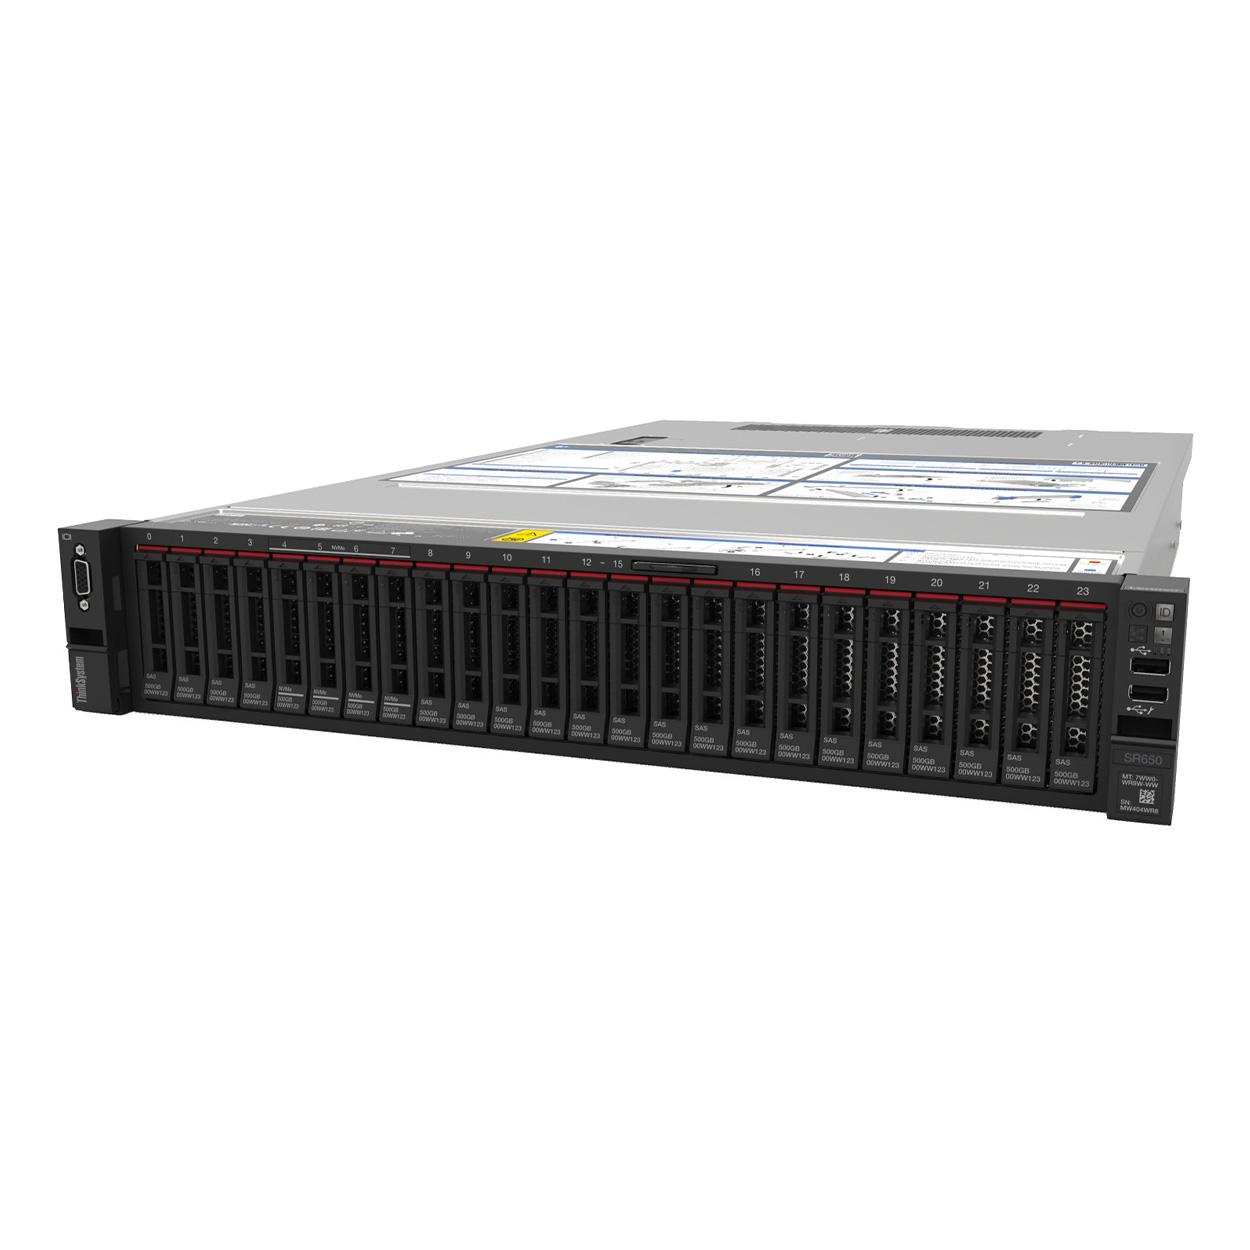 LENOVO SR650 -V2 SILVER 4210R 10C 32GB 3X1.8 TB 10K 12Gb SAS 2U RACK 2x750W 1Gb 2-port RJ45 LOM Server